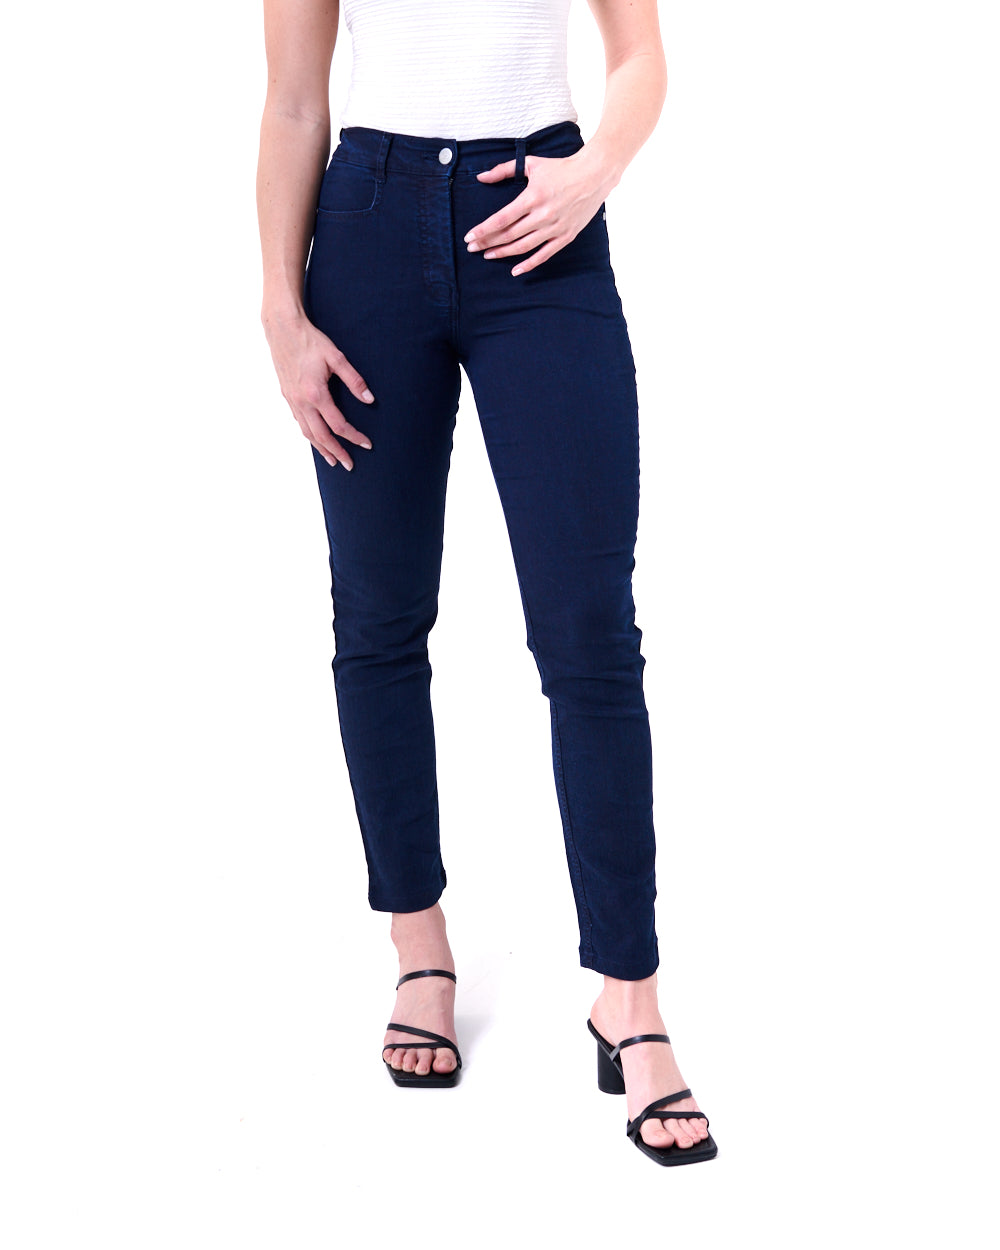 Barrington Annika Side Elastic Jeans Indigo Denim